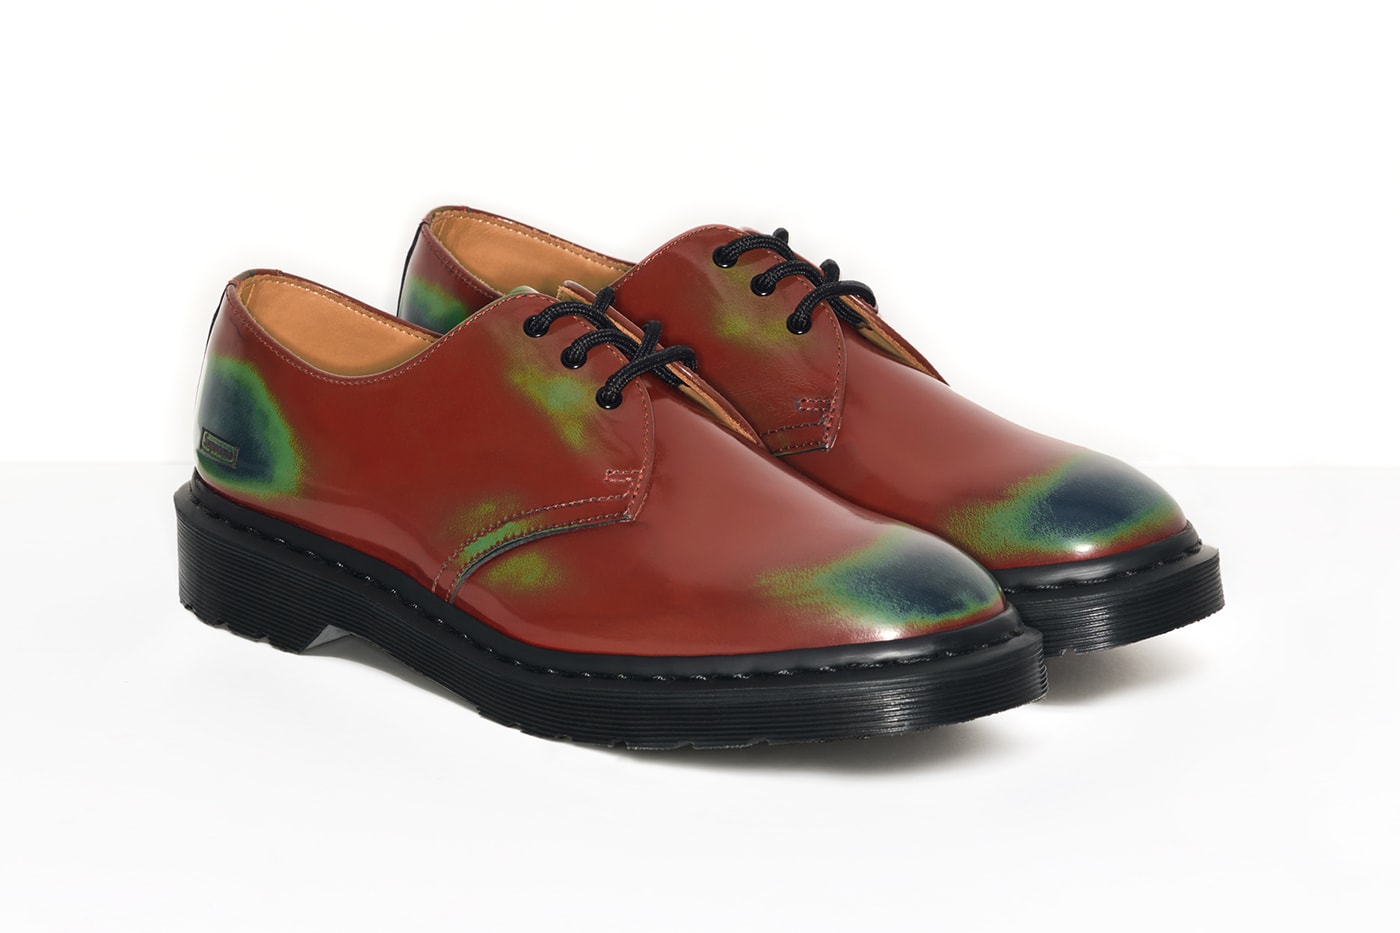 Supreme x Dr. Martens Spring 2024 1461 Oxford Shoe Collaboration Release Info